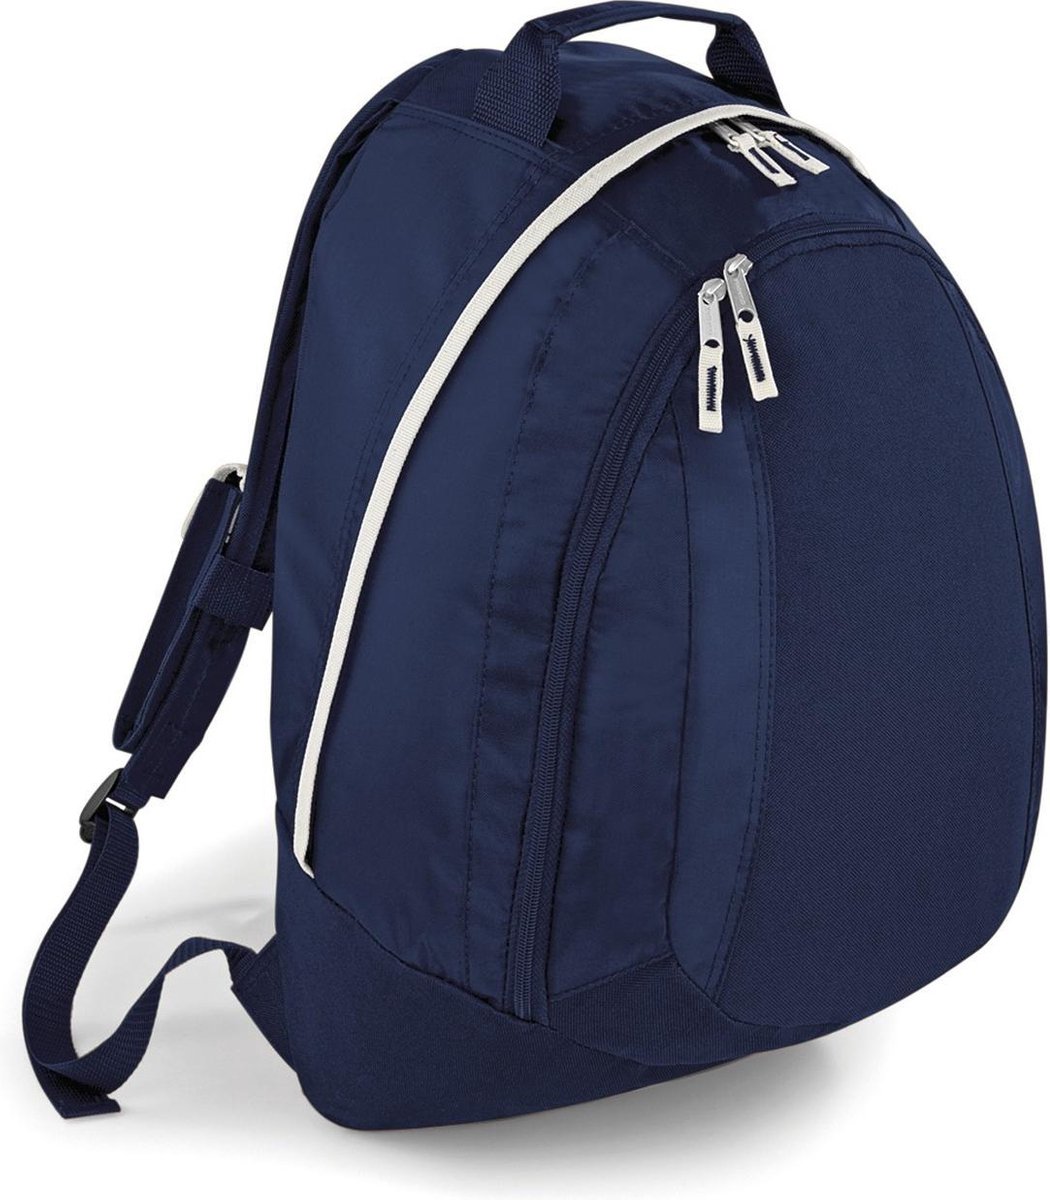 Quadra Teamwear Backpack Navy/Putty